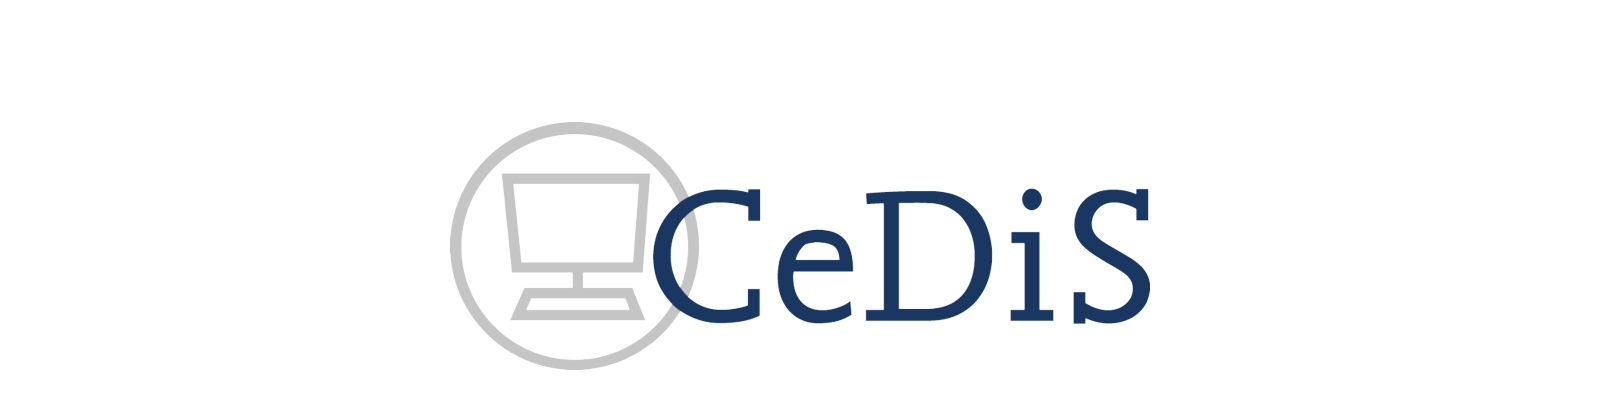 Logo of Center für Digitale Systeme (CeDiS)